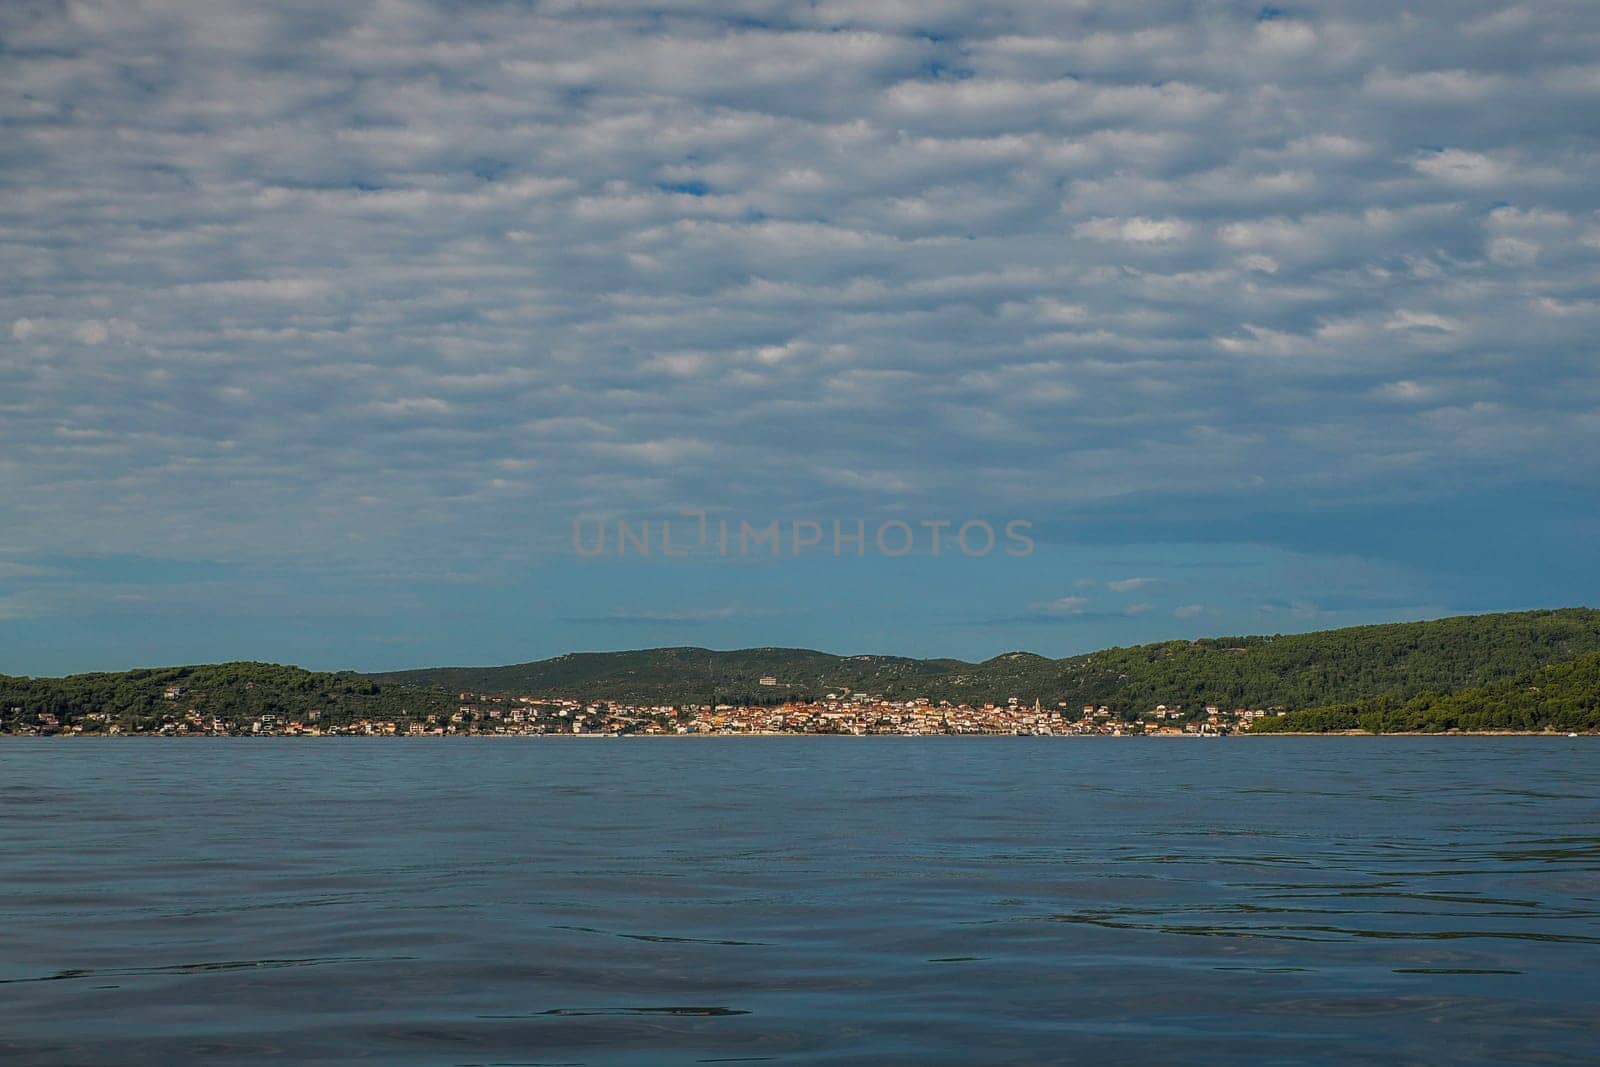 Ugljan island in front of Zadar - Archipelago - Islands of the Kornati archipelago national park in Croatia landscape view from the sea boat